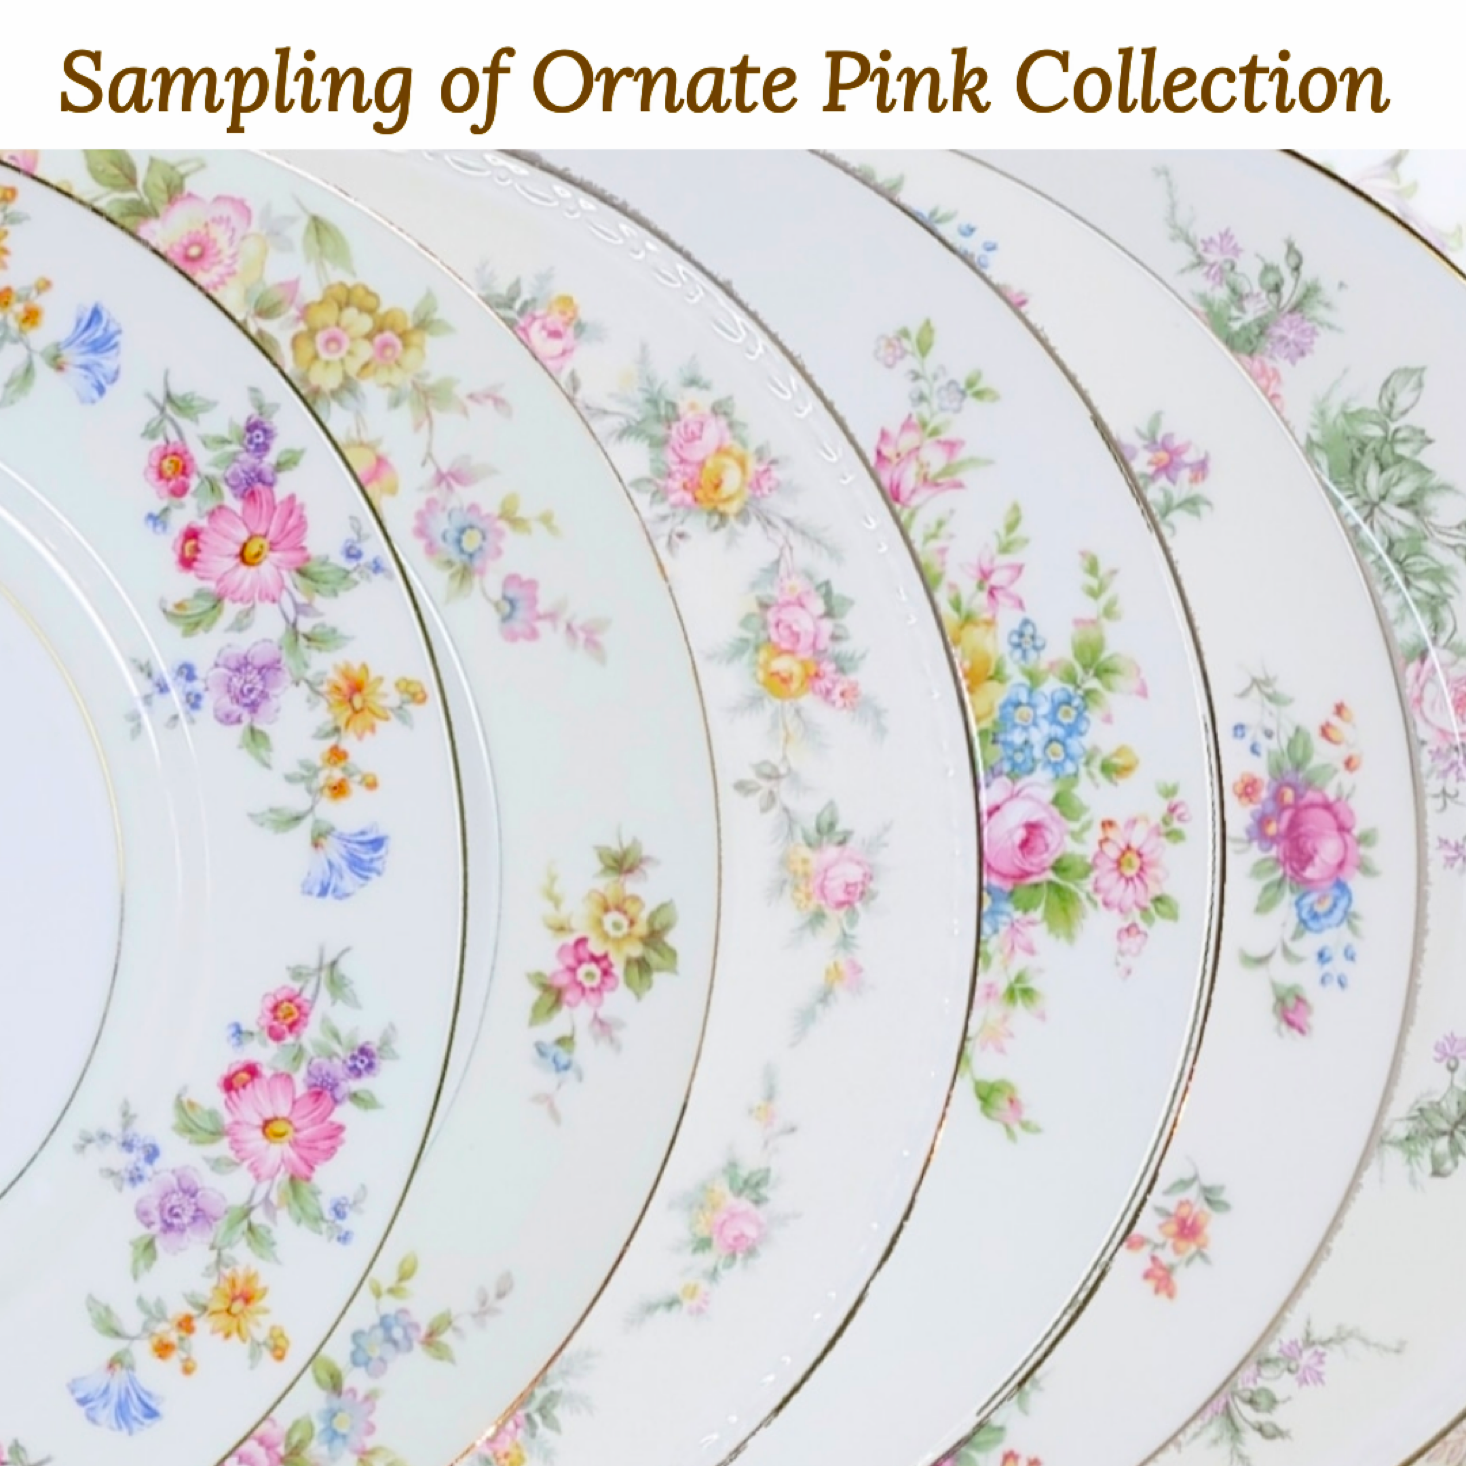 Sampling of Ornate Pink Collection.png